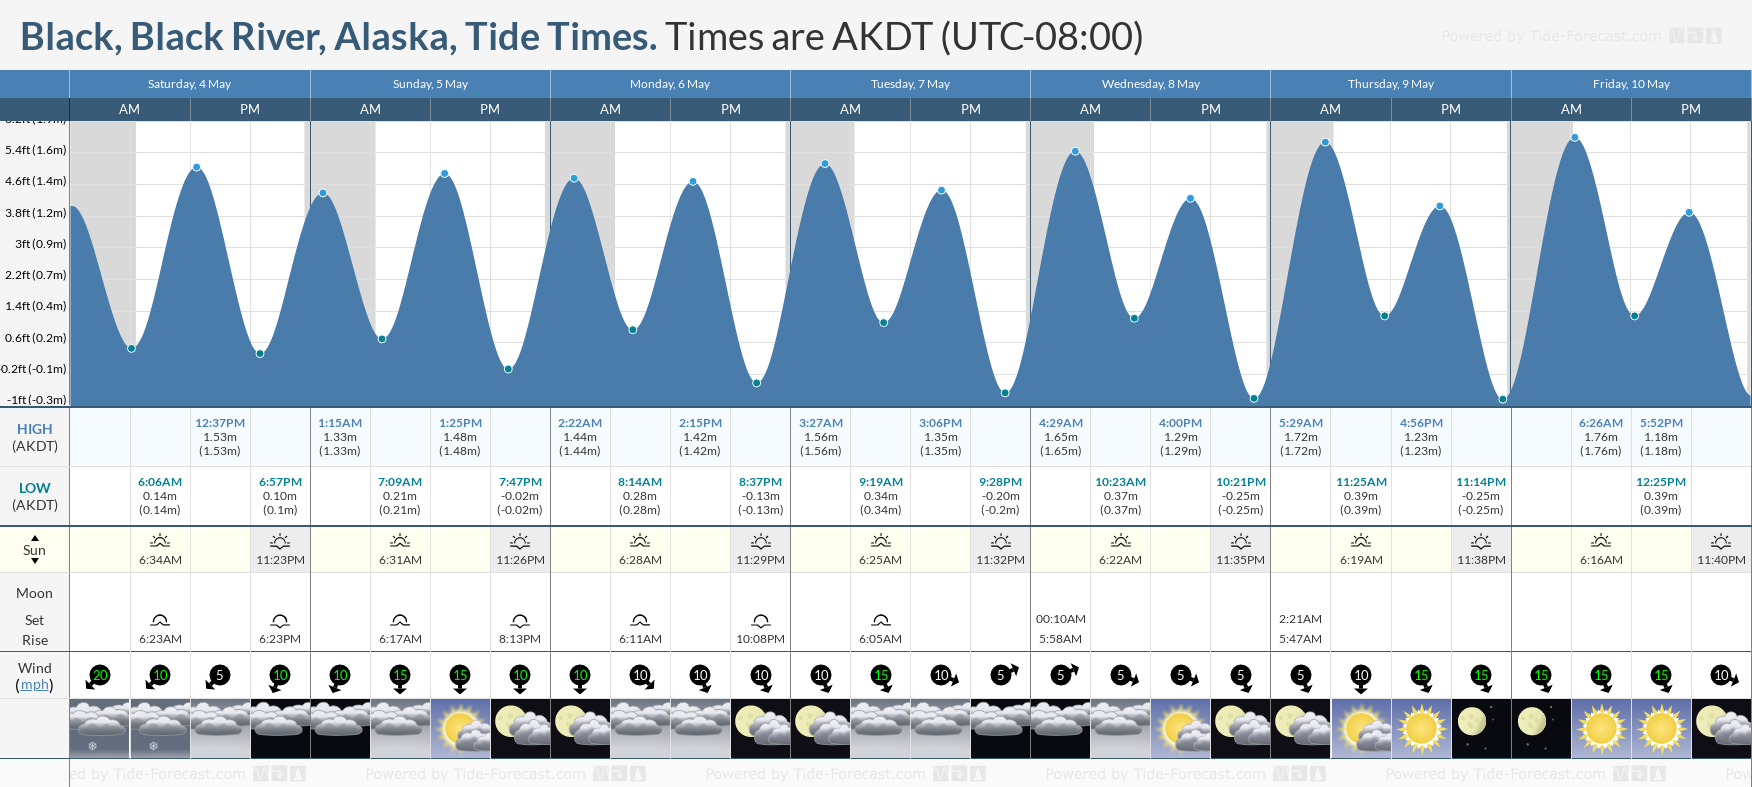 Black, Black River, Alaska Tide Chart including high and low tide tide times for the next 7 days